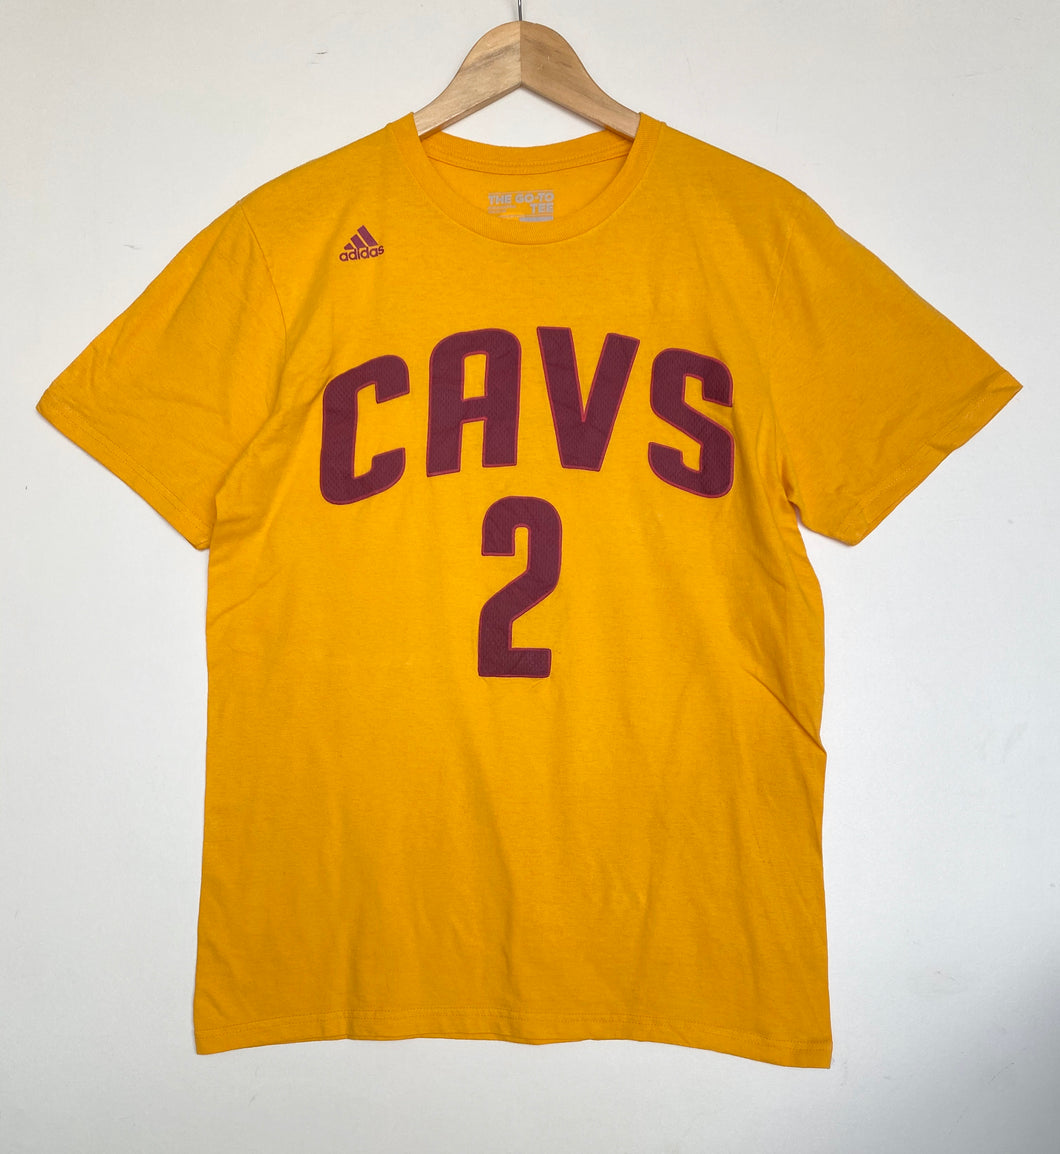 NBA Cavaliers t-shirt (M)